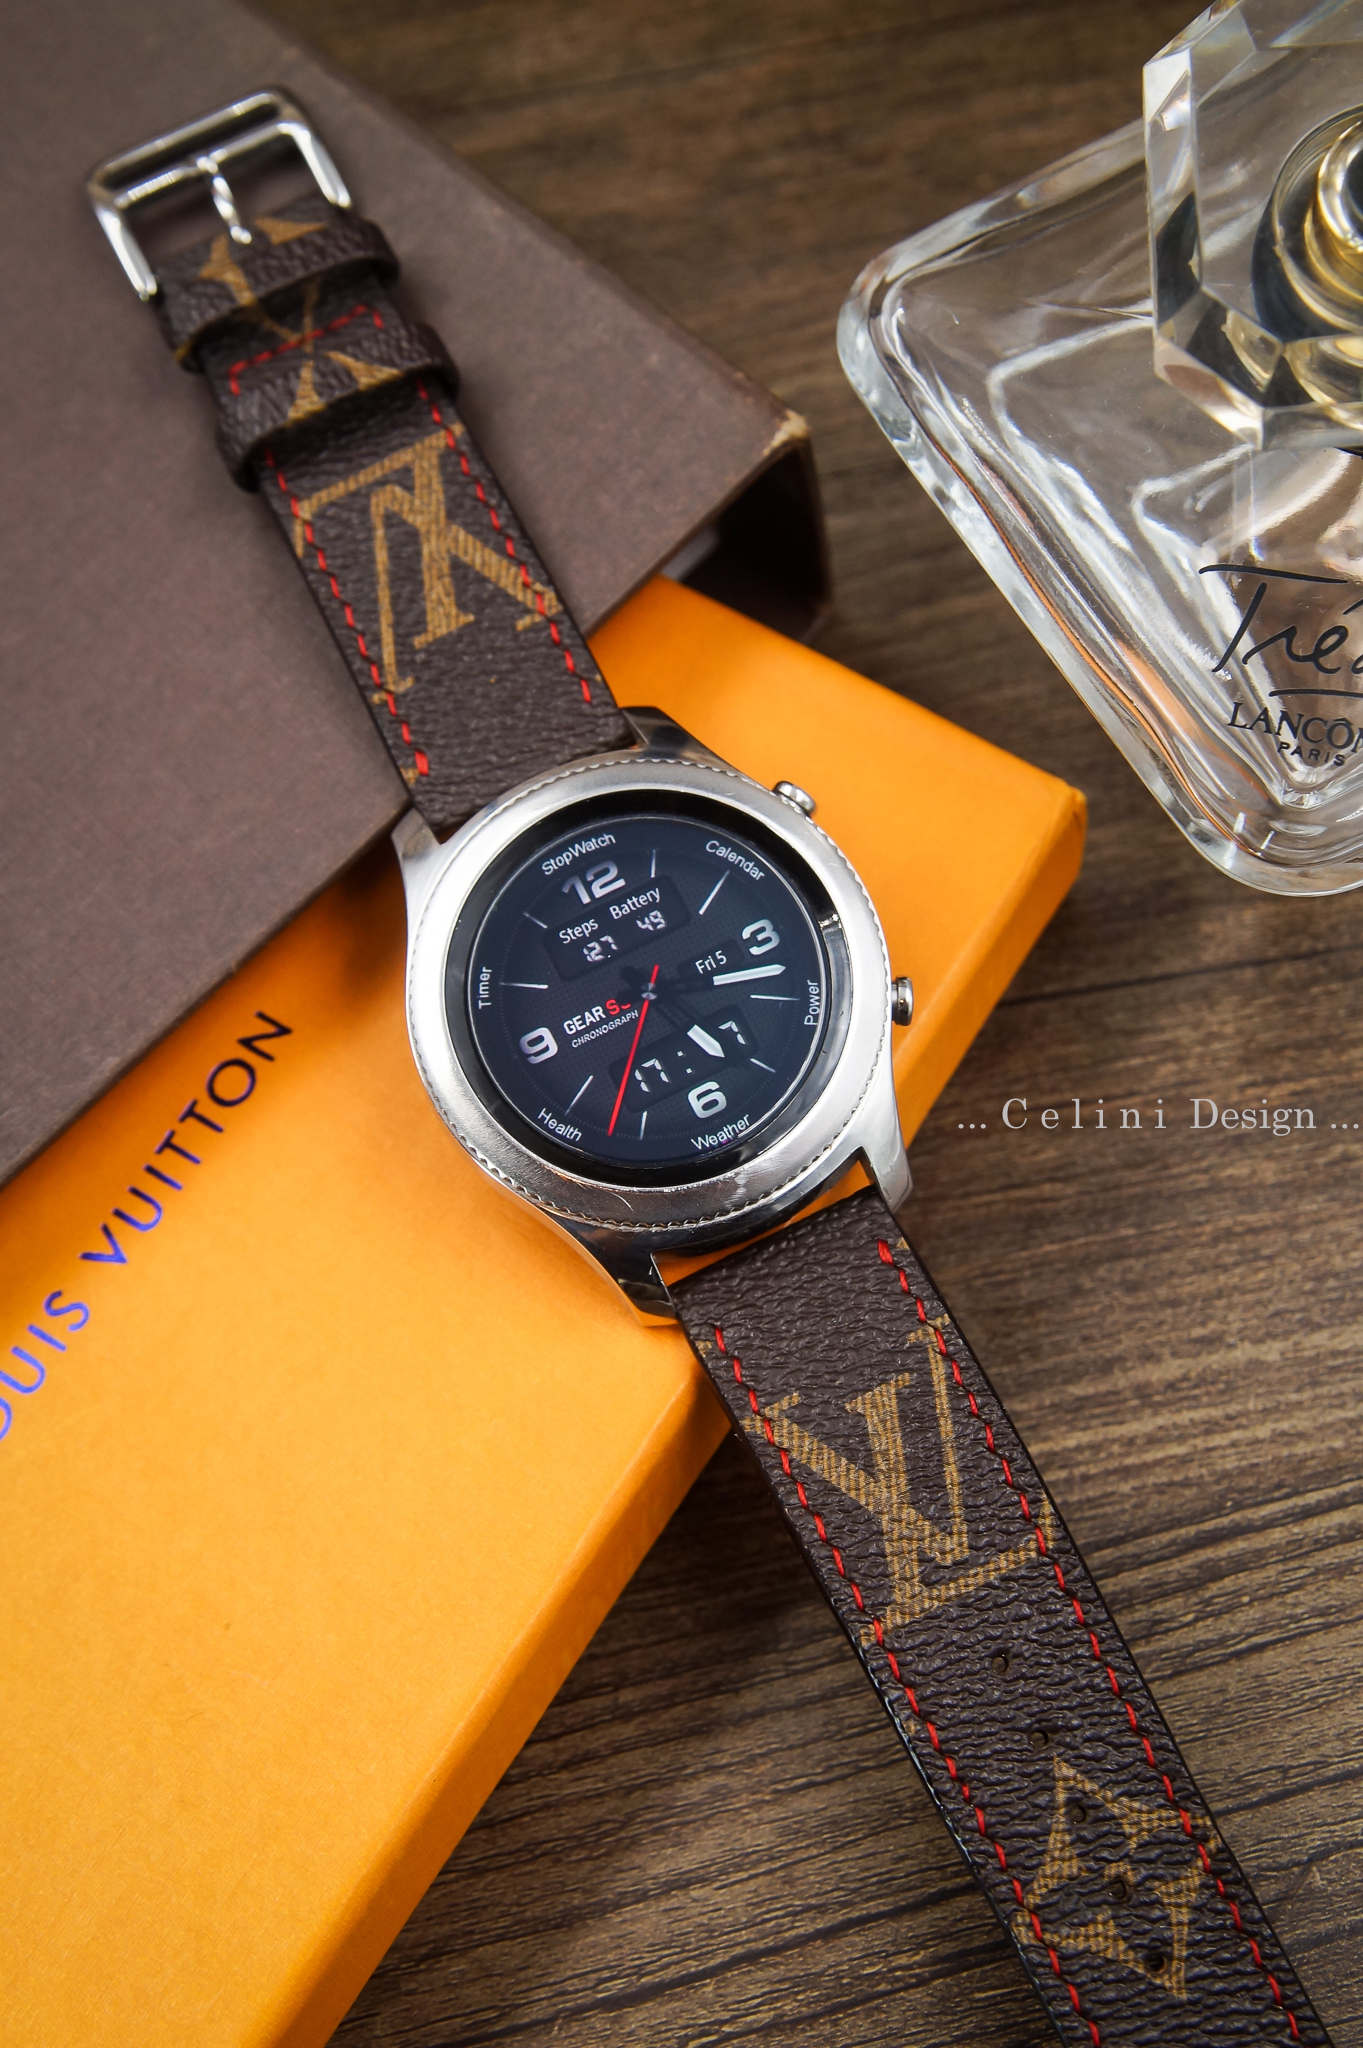 Samsung Galaxy Watch Rose 42mm Bluetooth With Custom Louis Vuitton